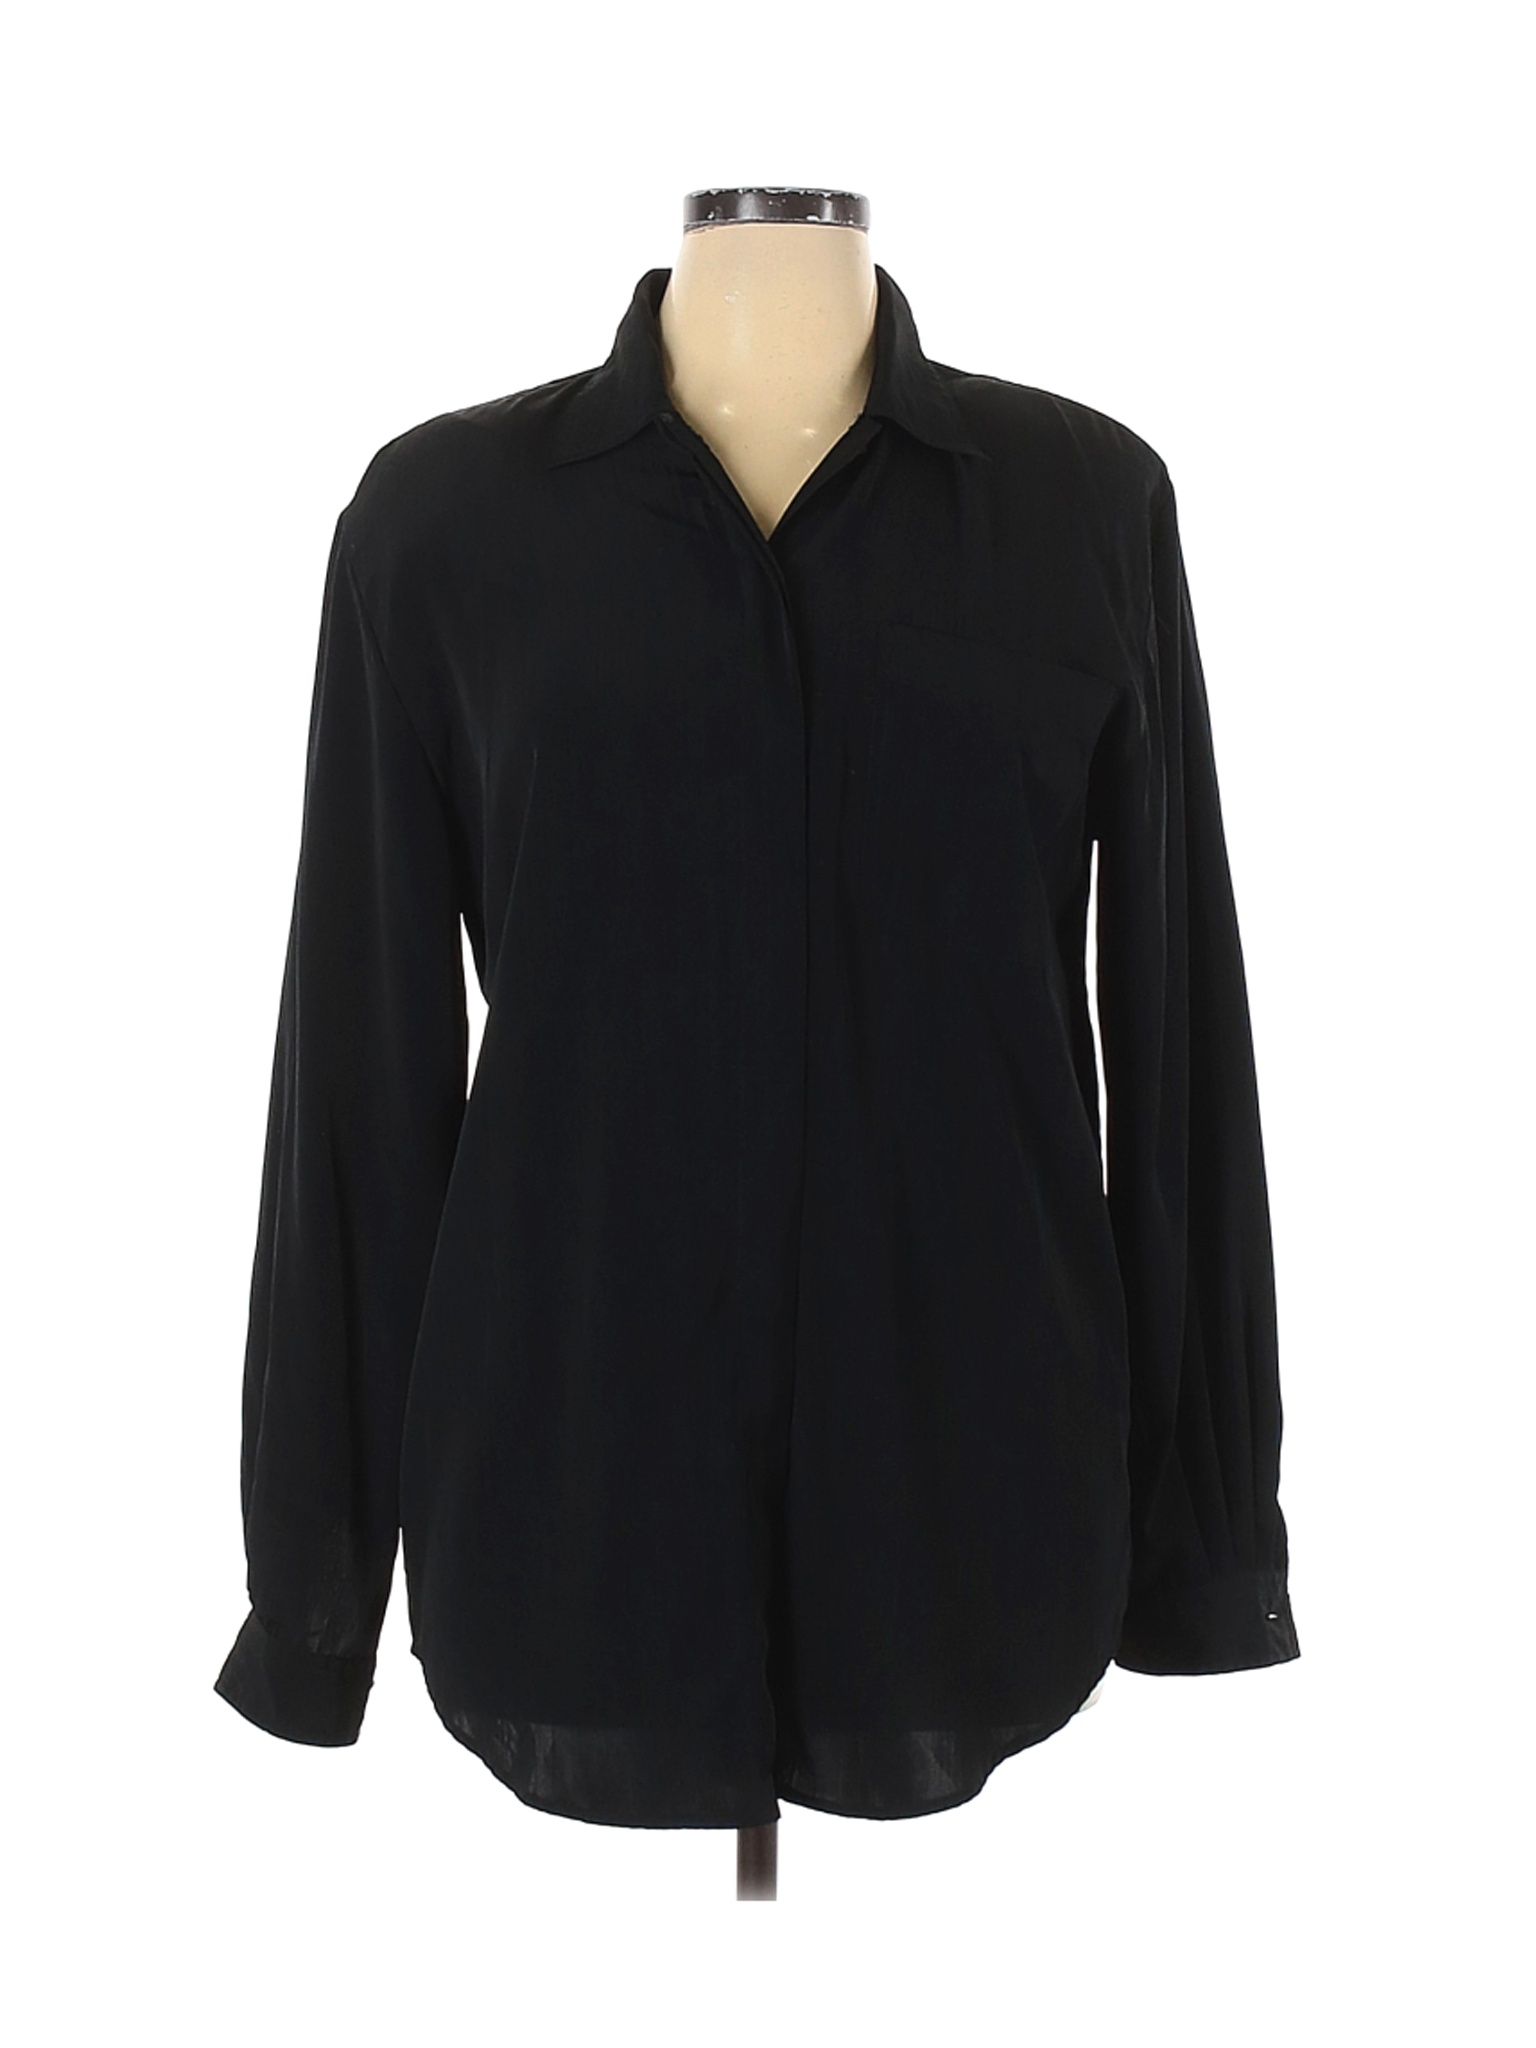 Christie & Jill Women Black Long Sleeve Blouse 14 Tall | eBay